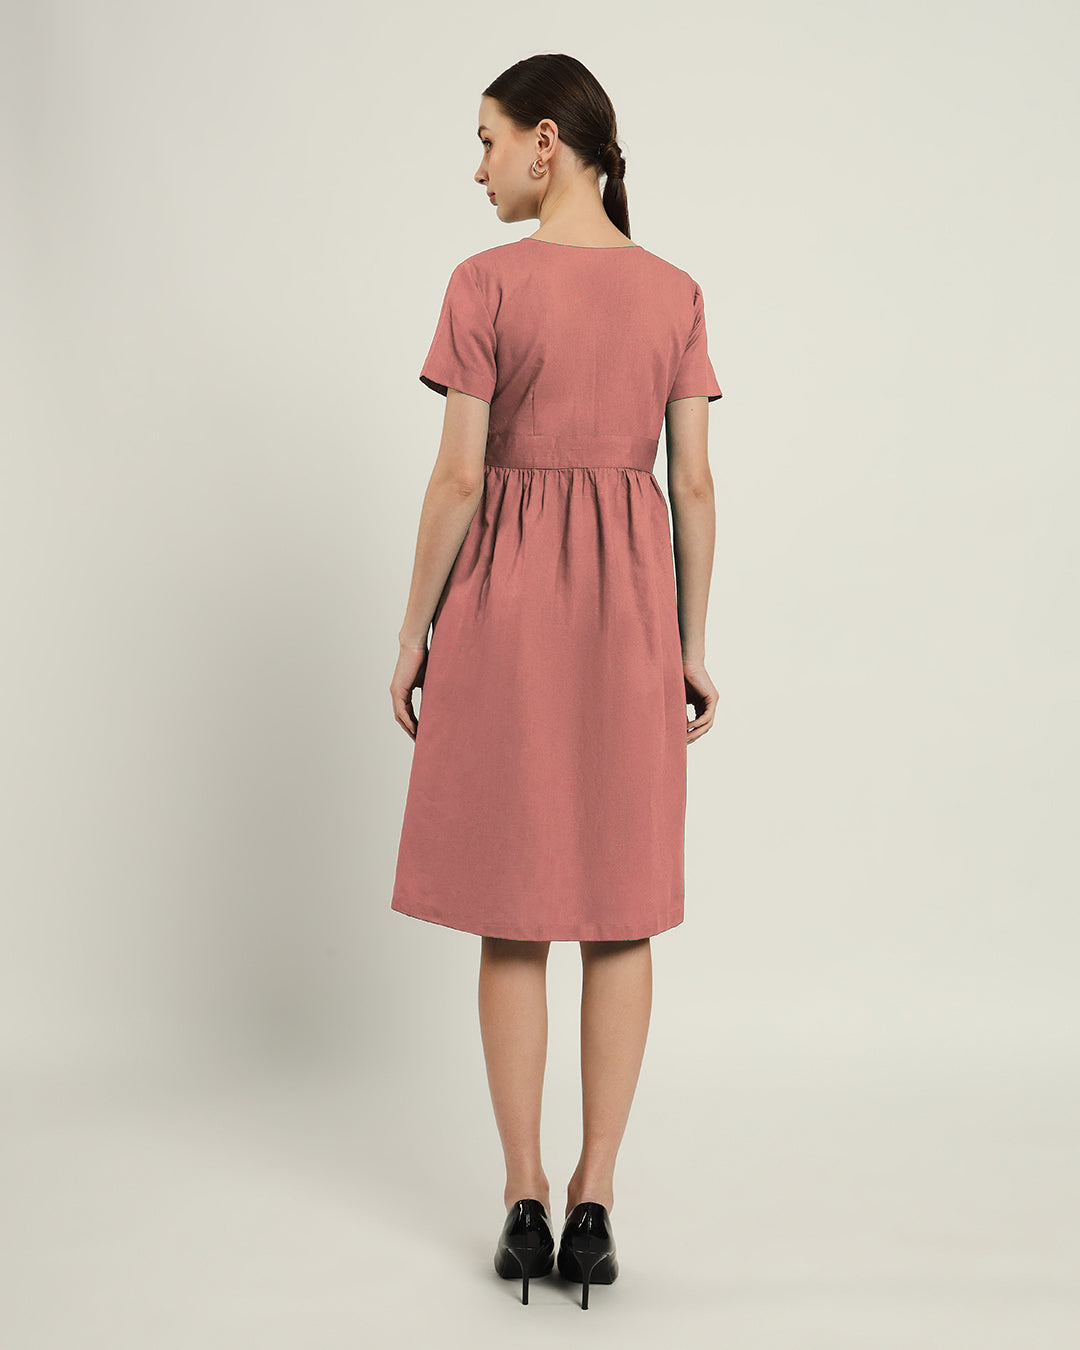 The Miyoshi Ivory Pink Cotton Dress